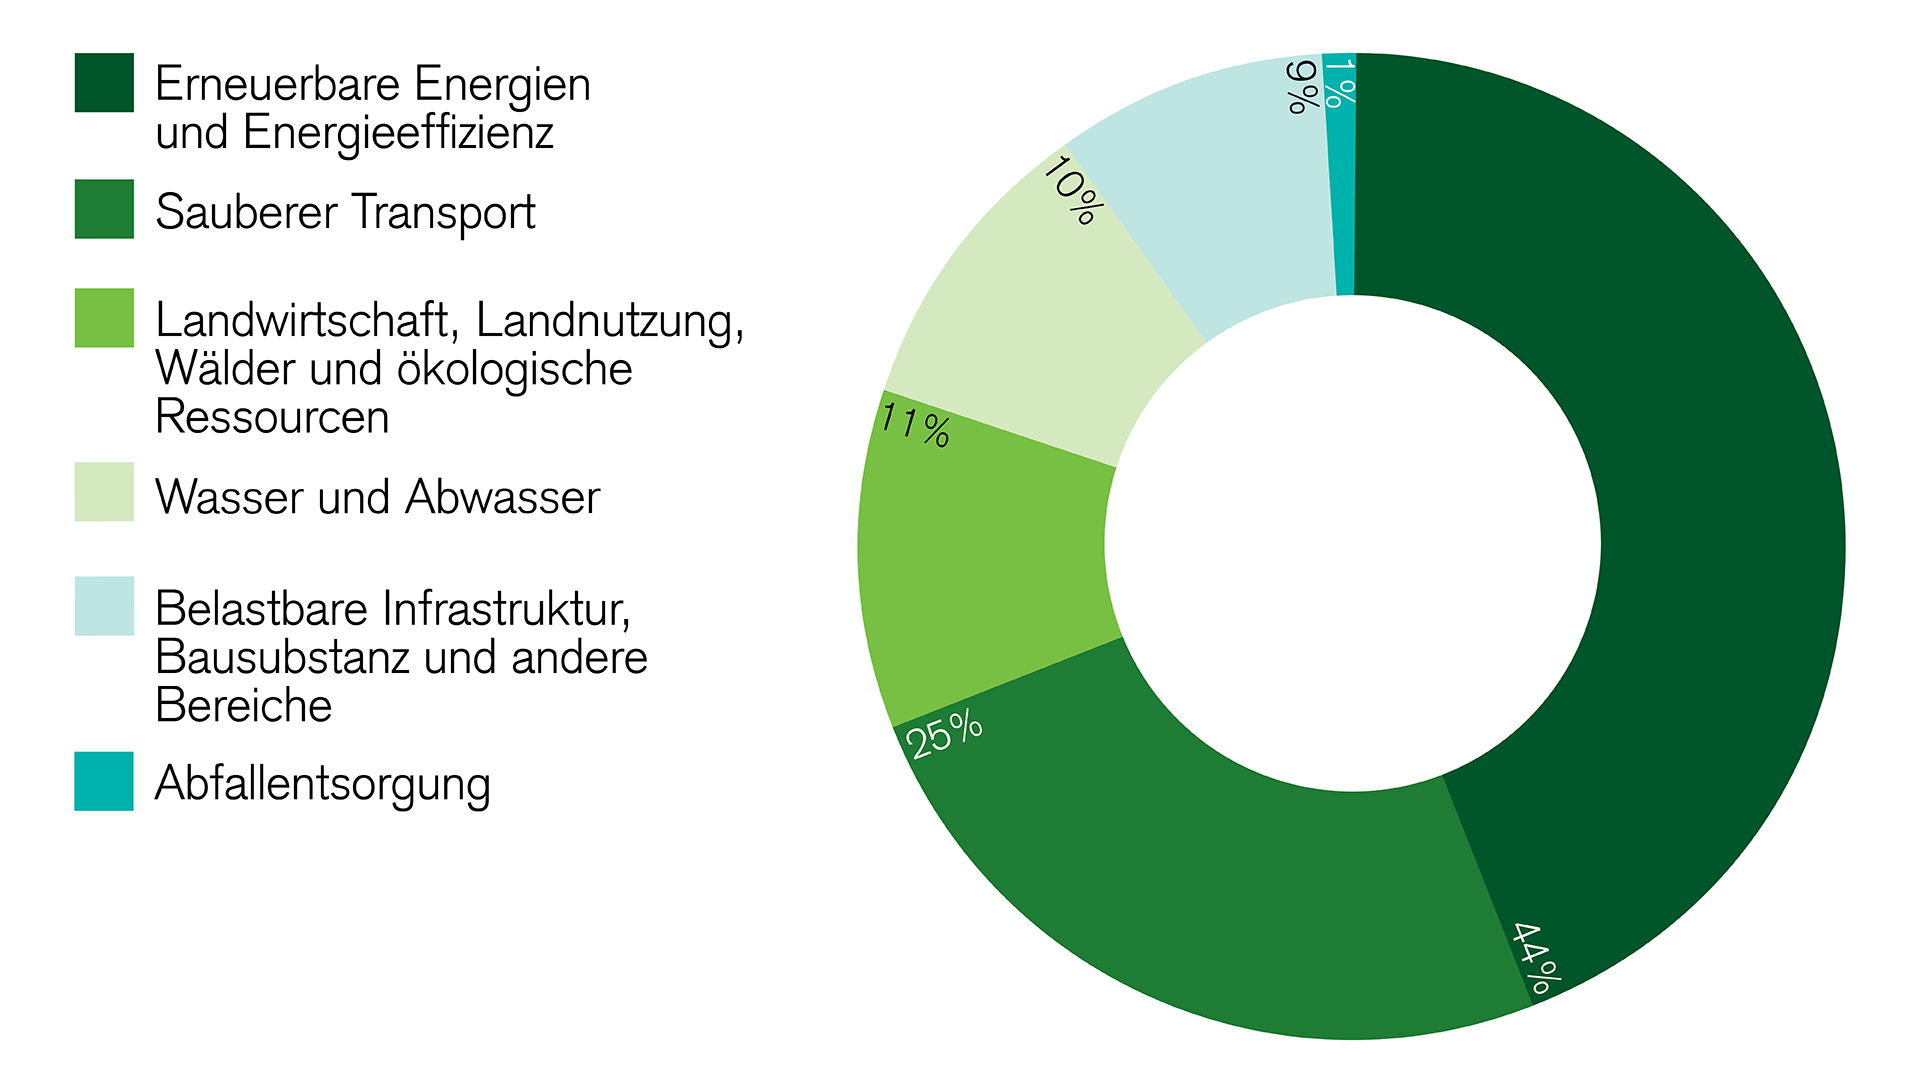 impact-investments-in-green-bonds-flossen-2018-in-erneuerbare-energien